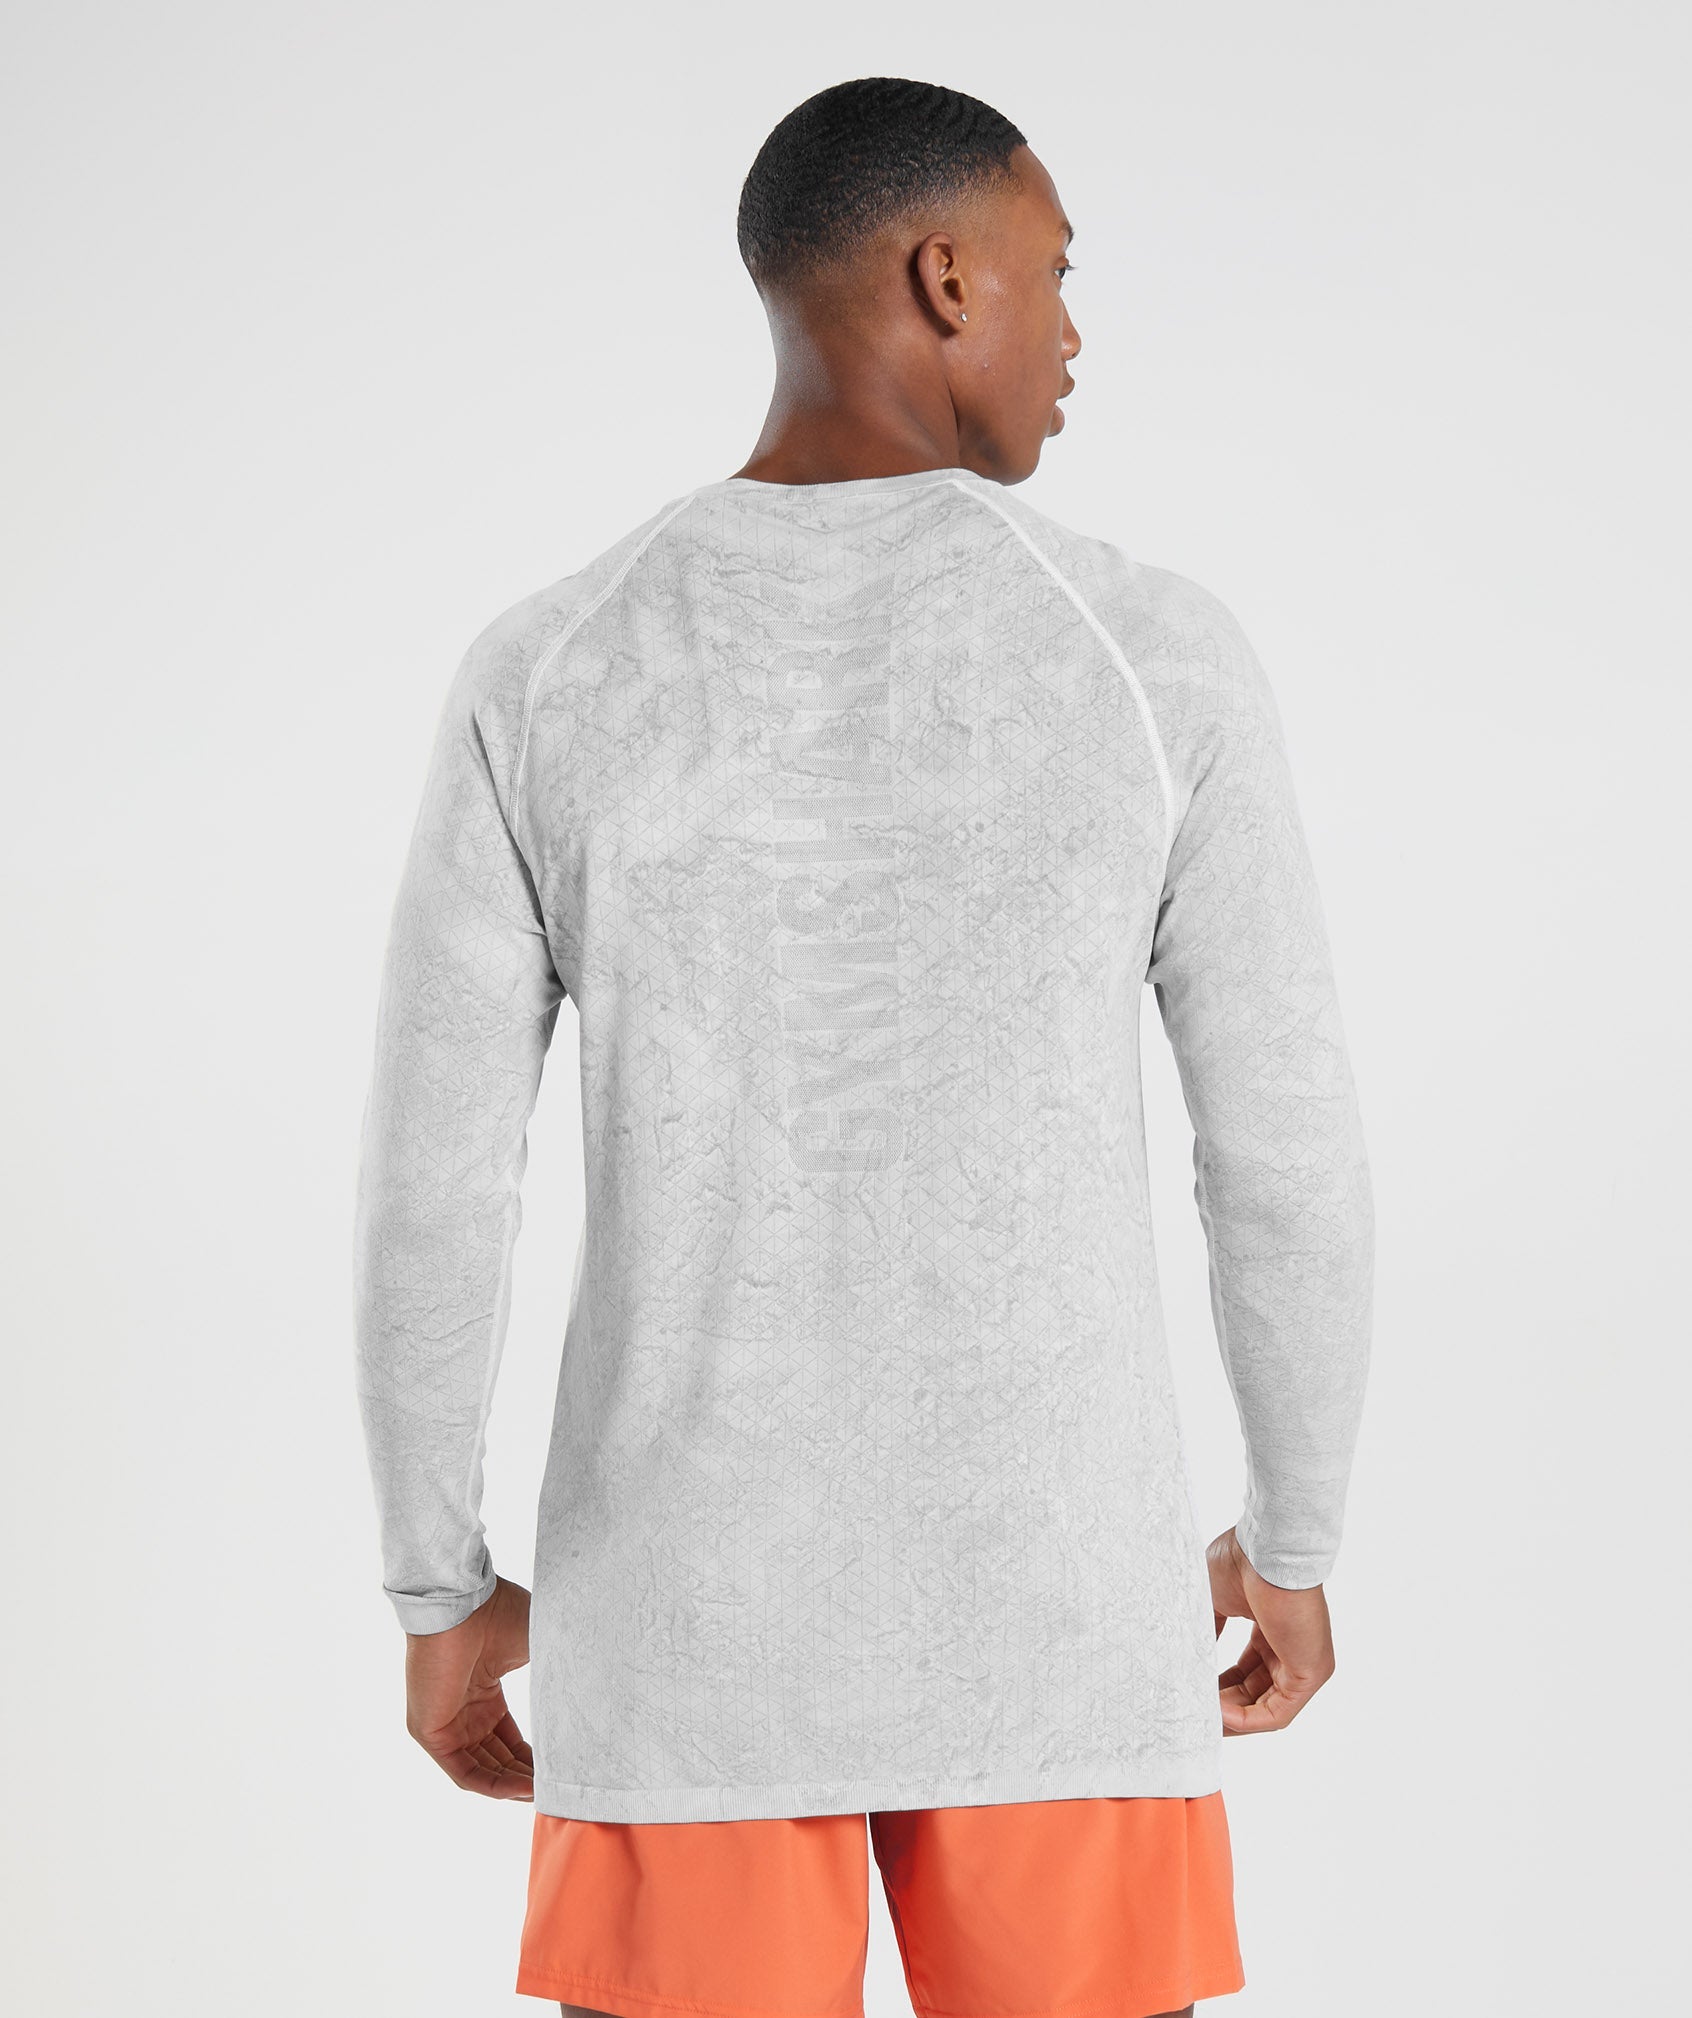 Geo Seamless Long Sleeve T-Shirt in White/Light Grey